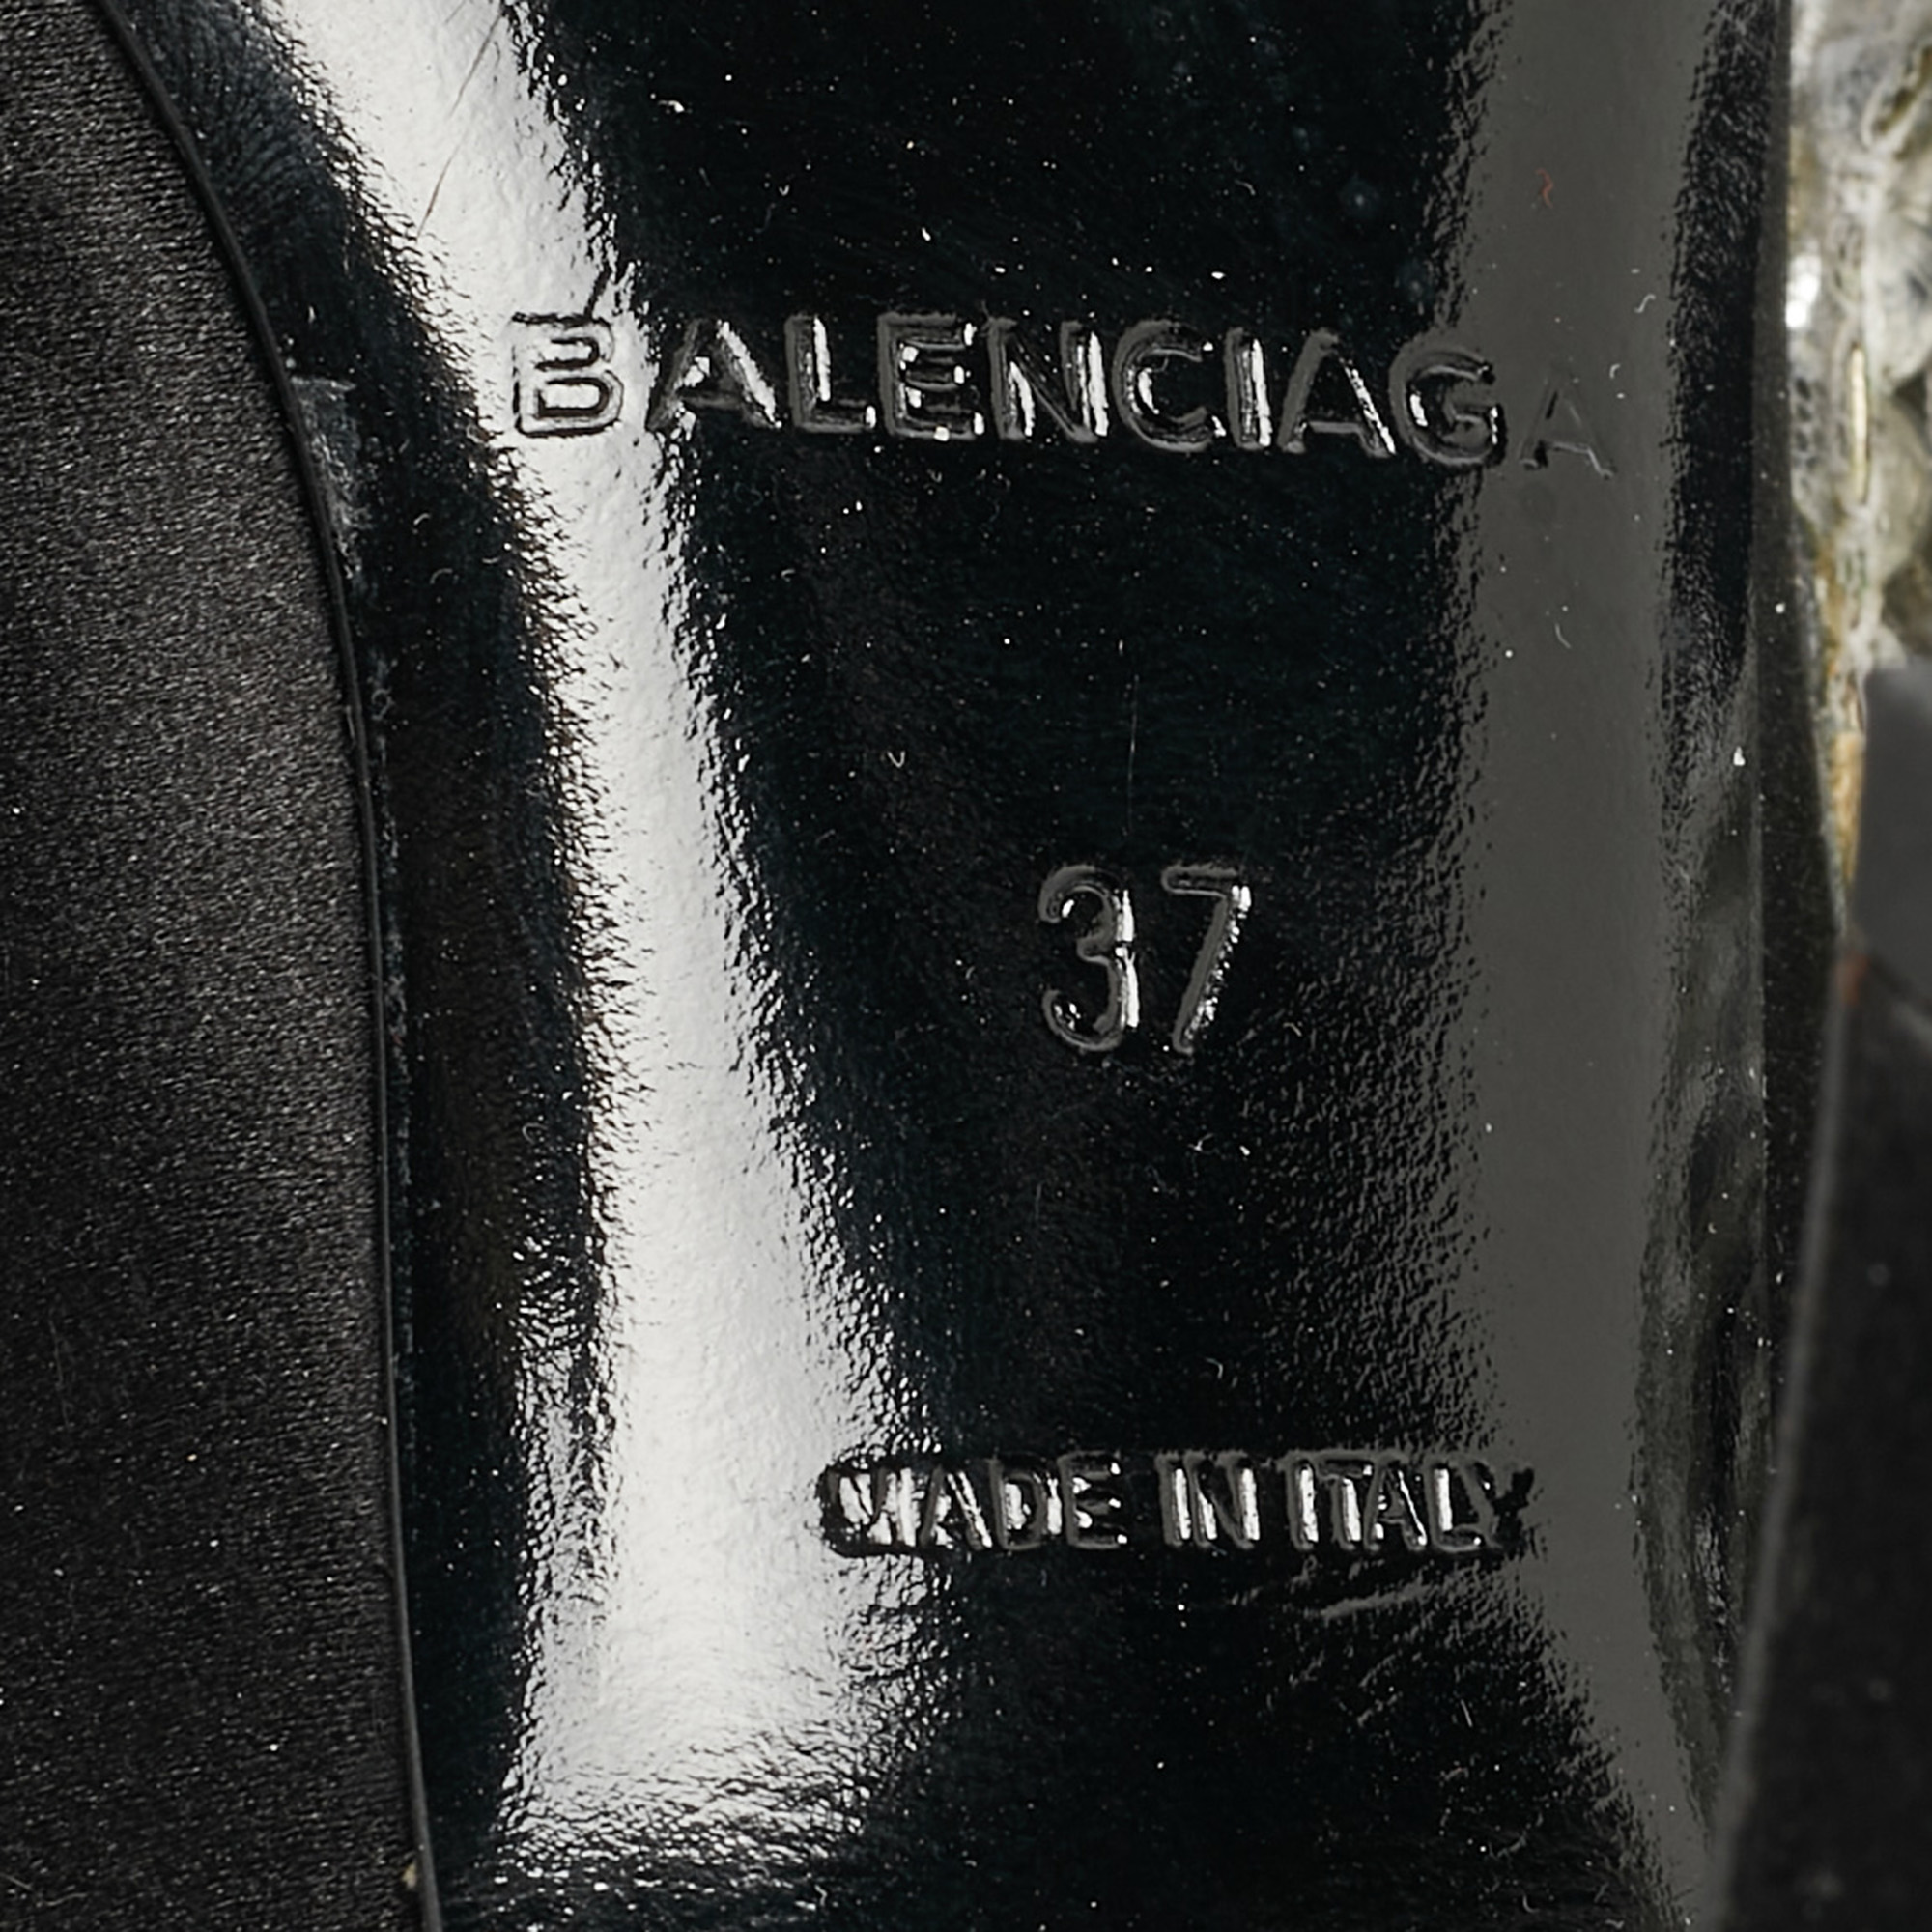 Balenciaga Black Satin Talon Slash Pumps Size 37